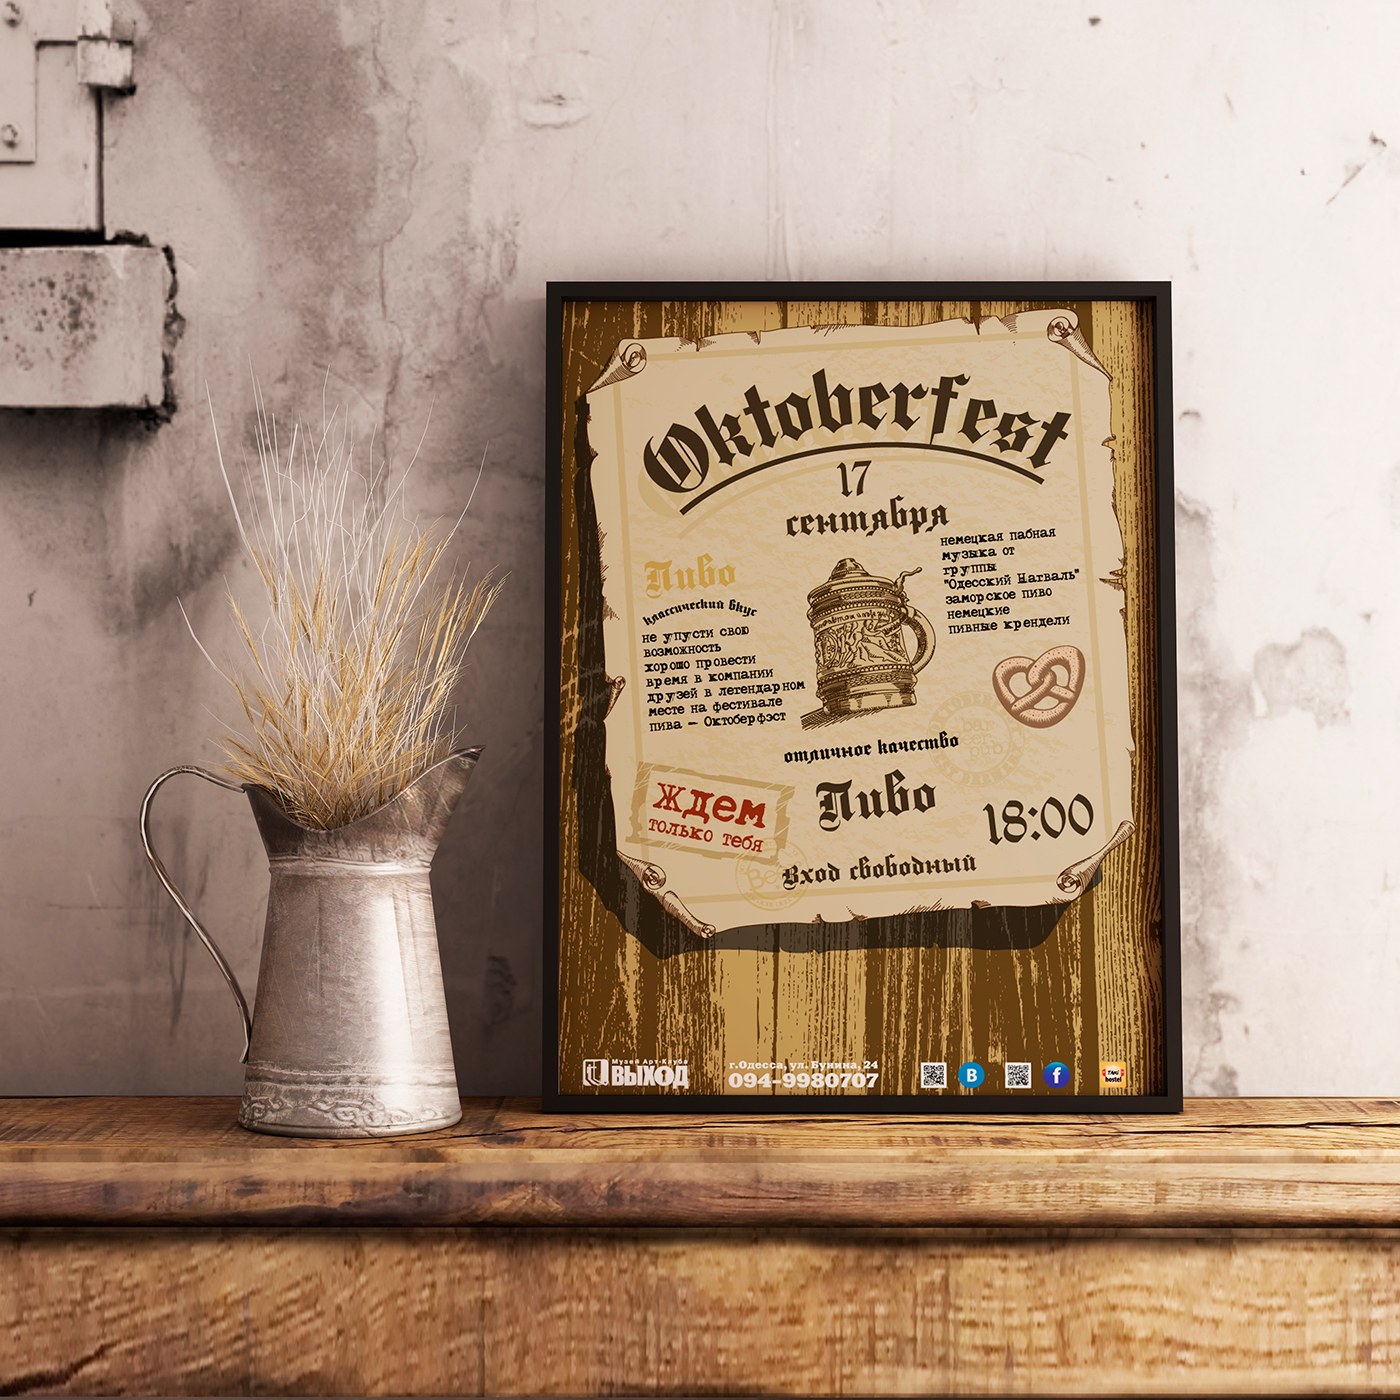 poster афиша иллюстрация club Exit octoberfest beer germany